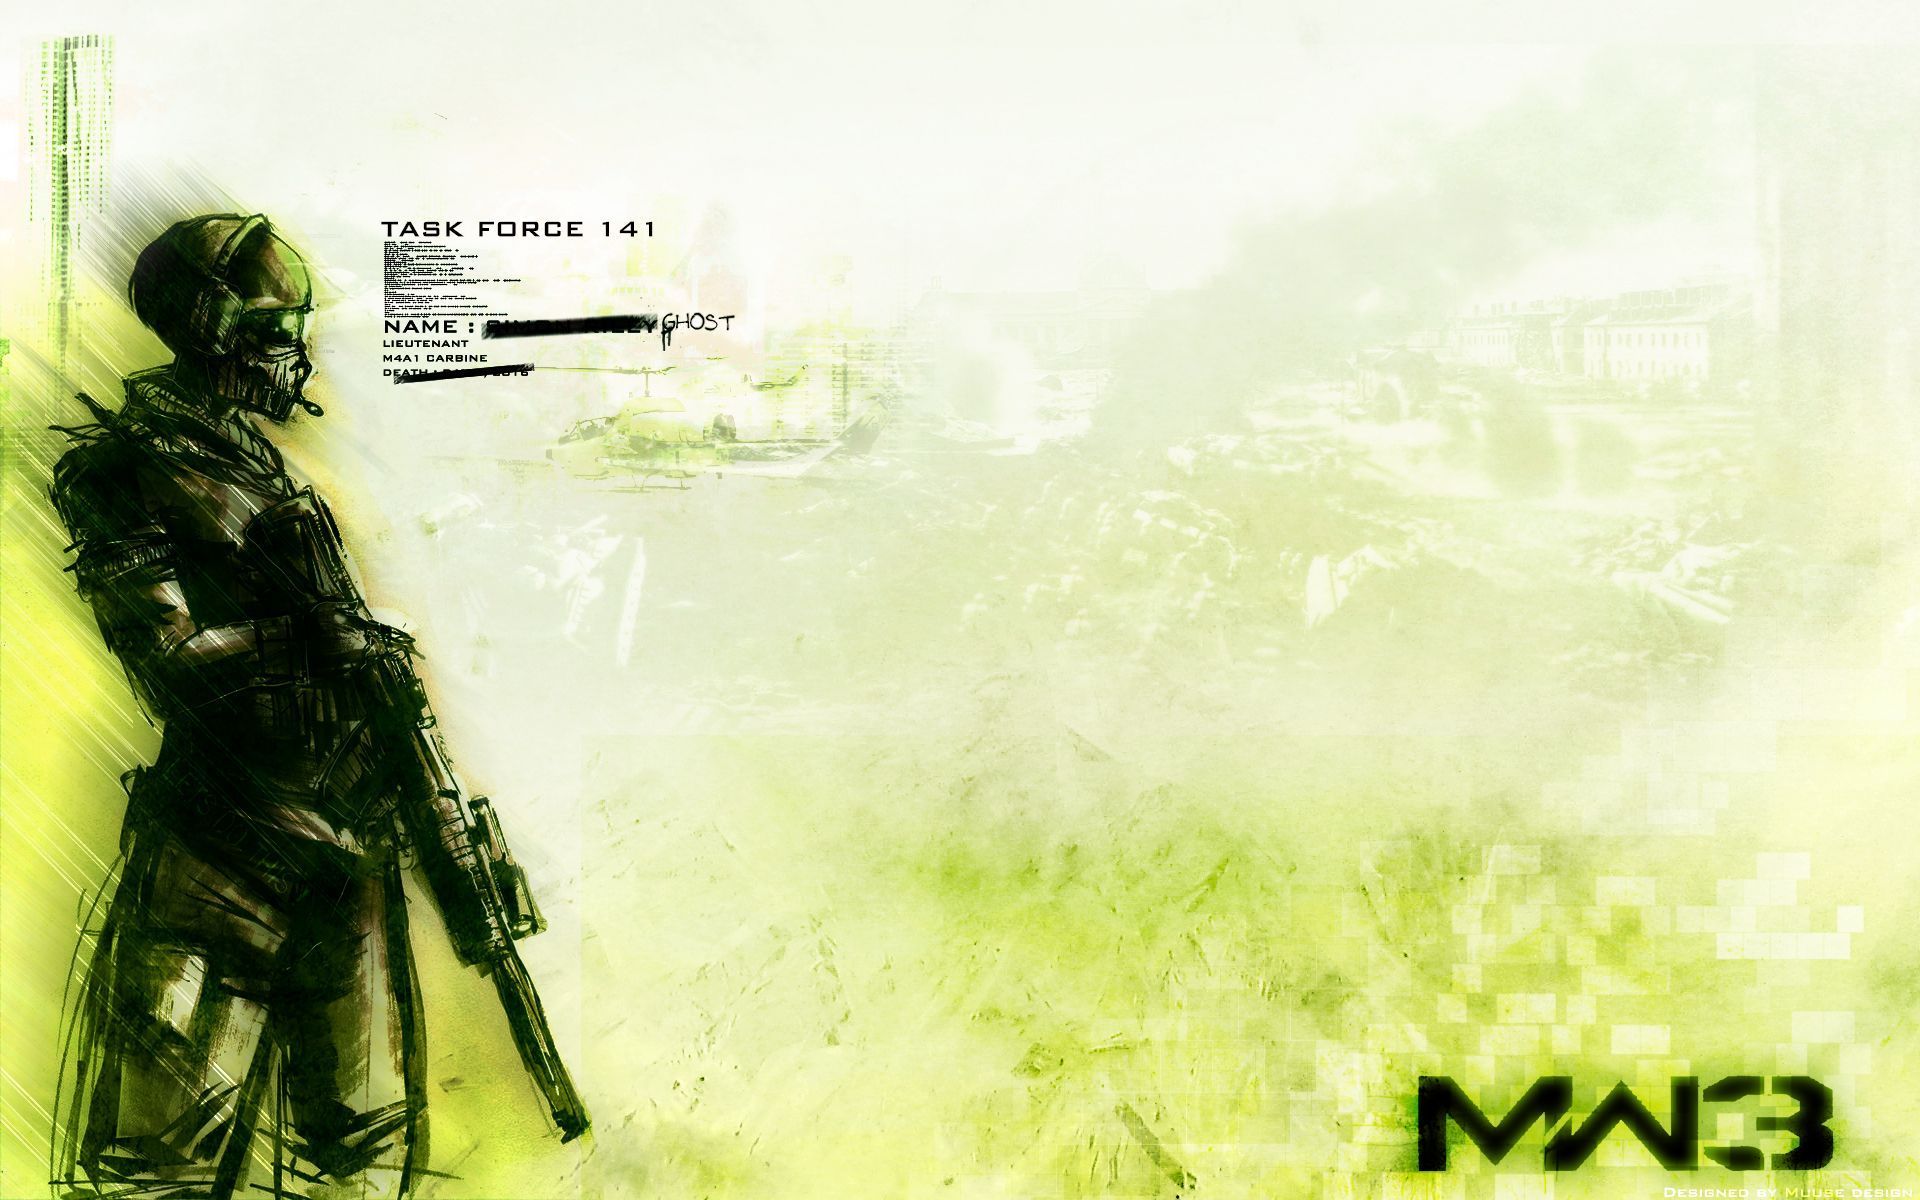 Modern Warfare 3 Wallpaper HD by MuuseDesign on DeviantArt